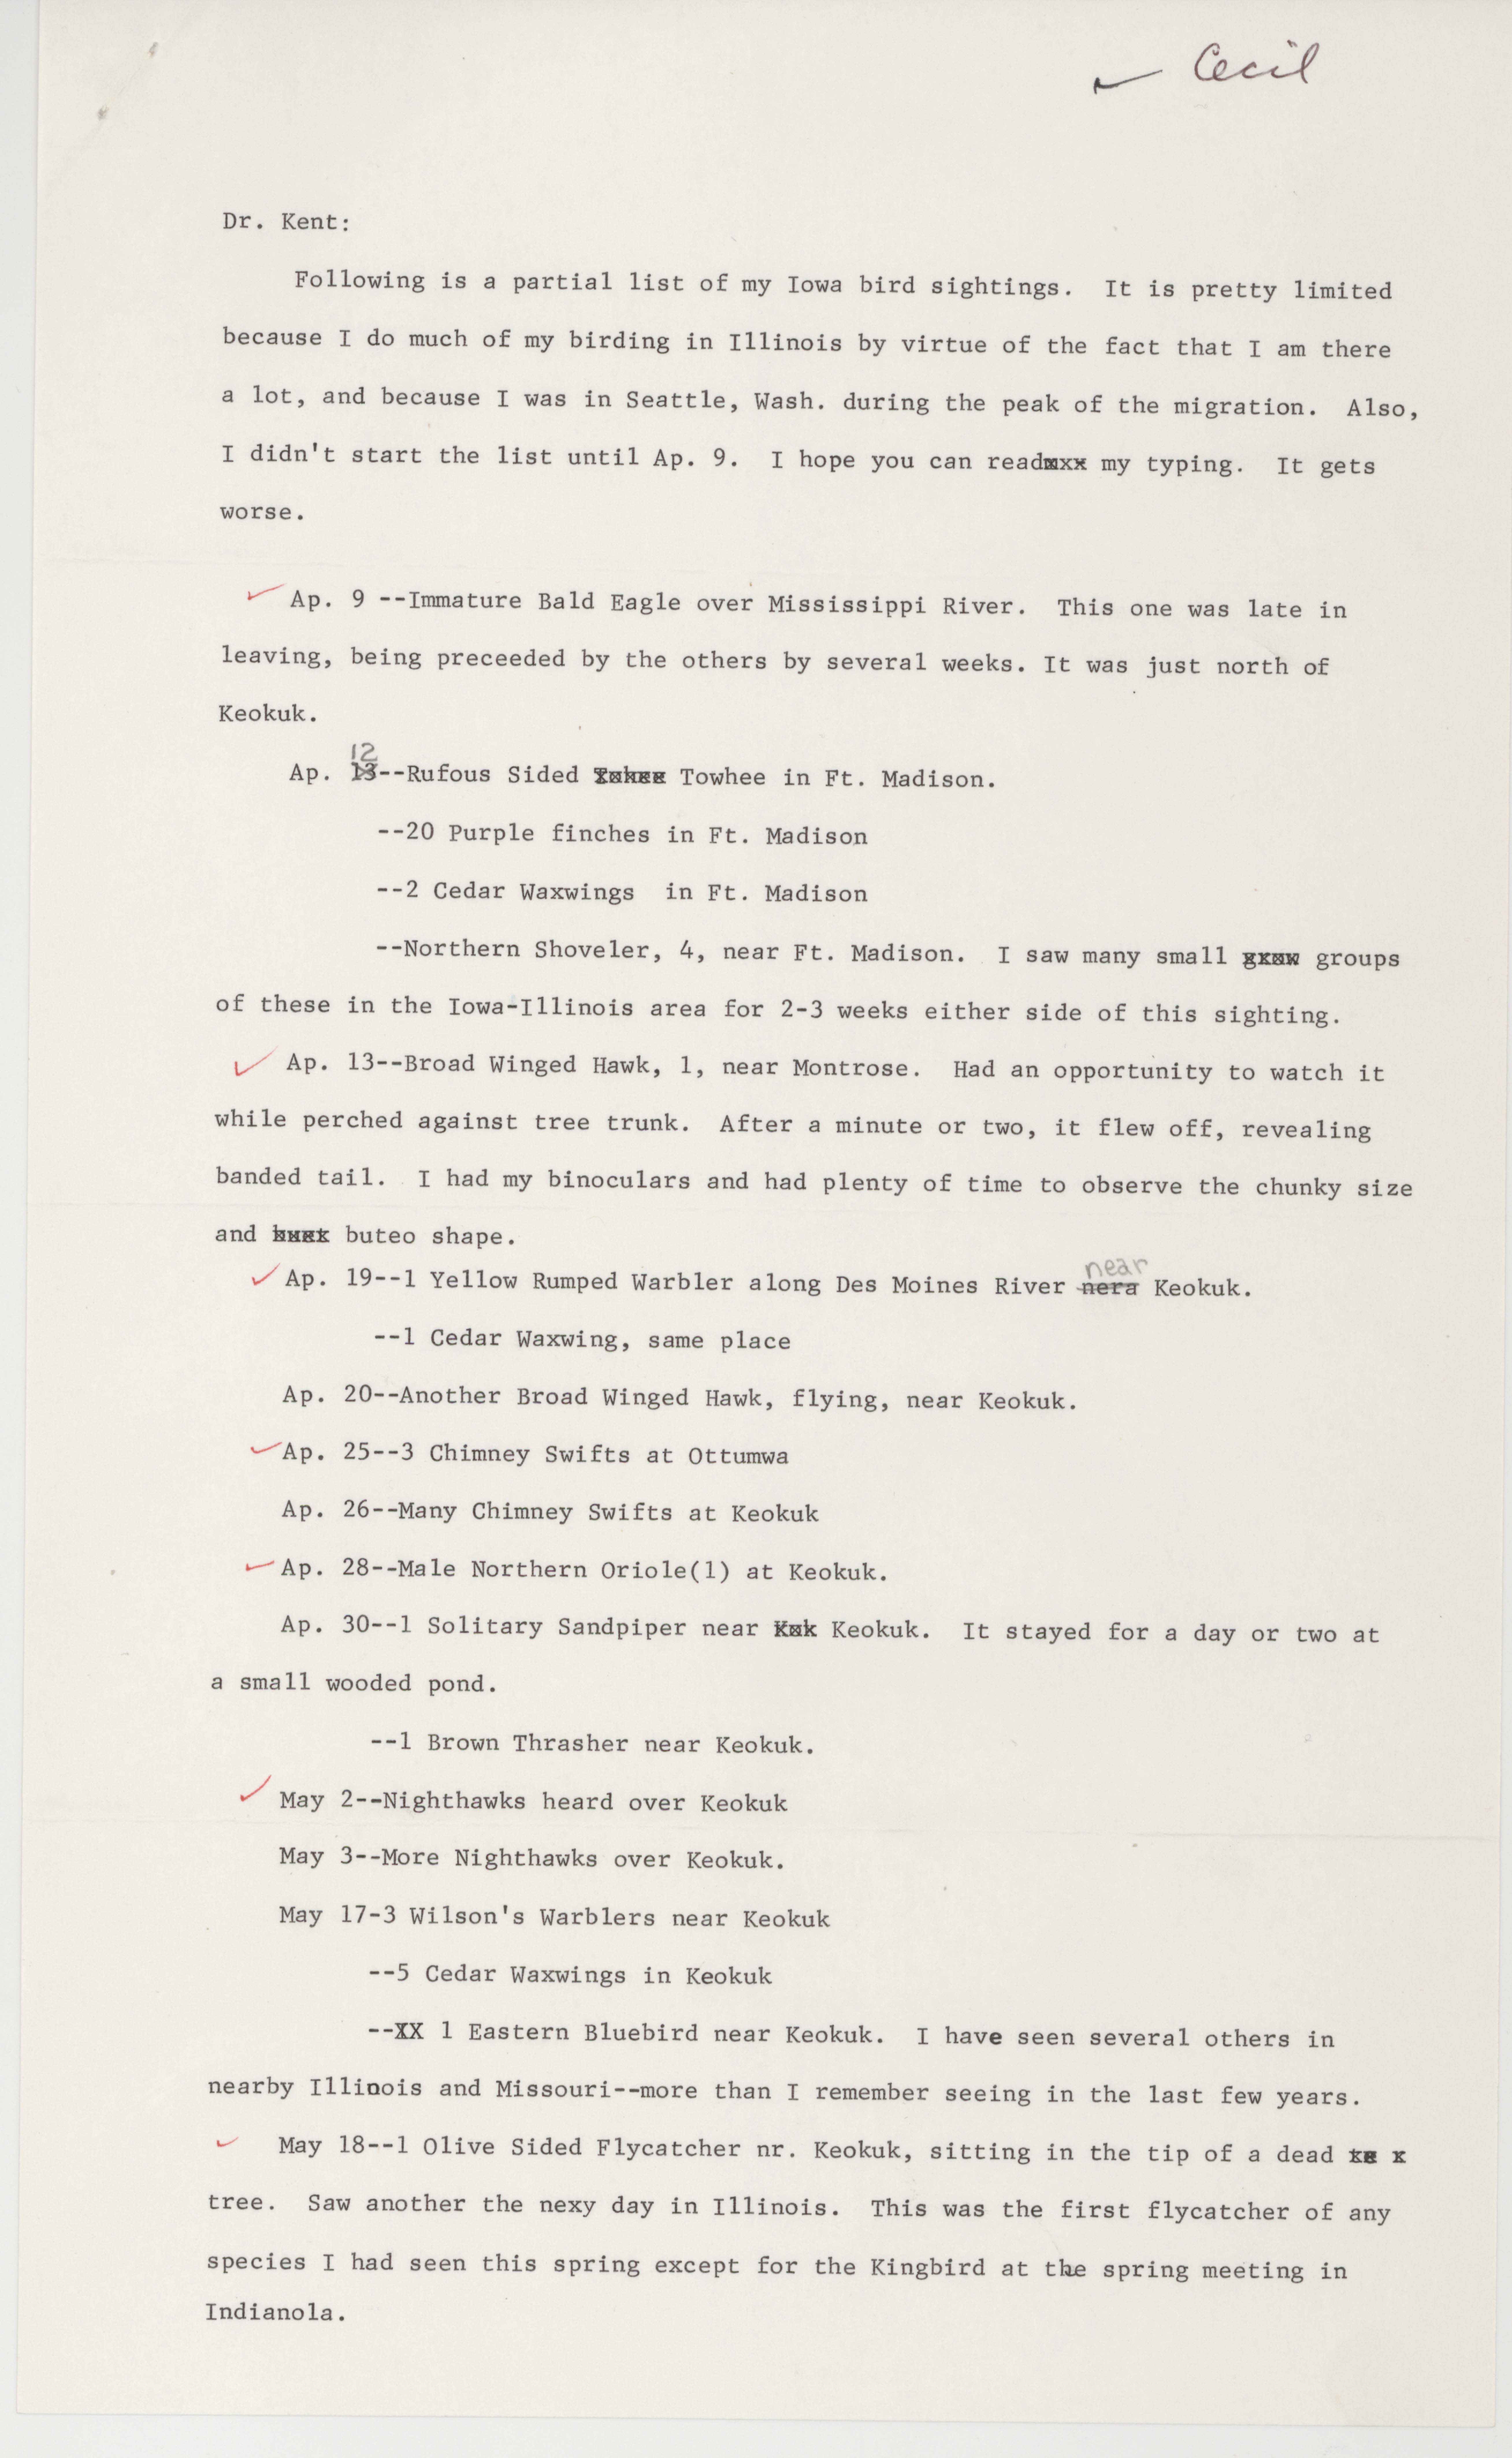 Robert I. Cecil letter to Thomas H. Kent regarding bird sightings, Keokuk, Iowa, spring 1984